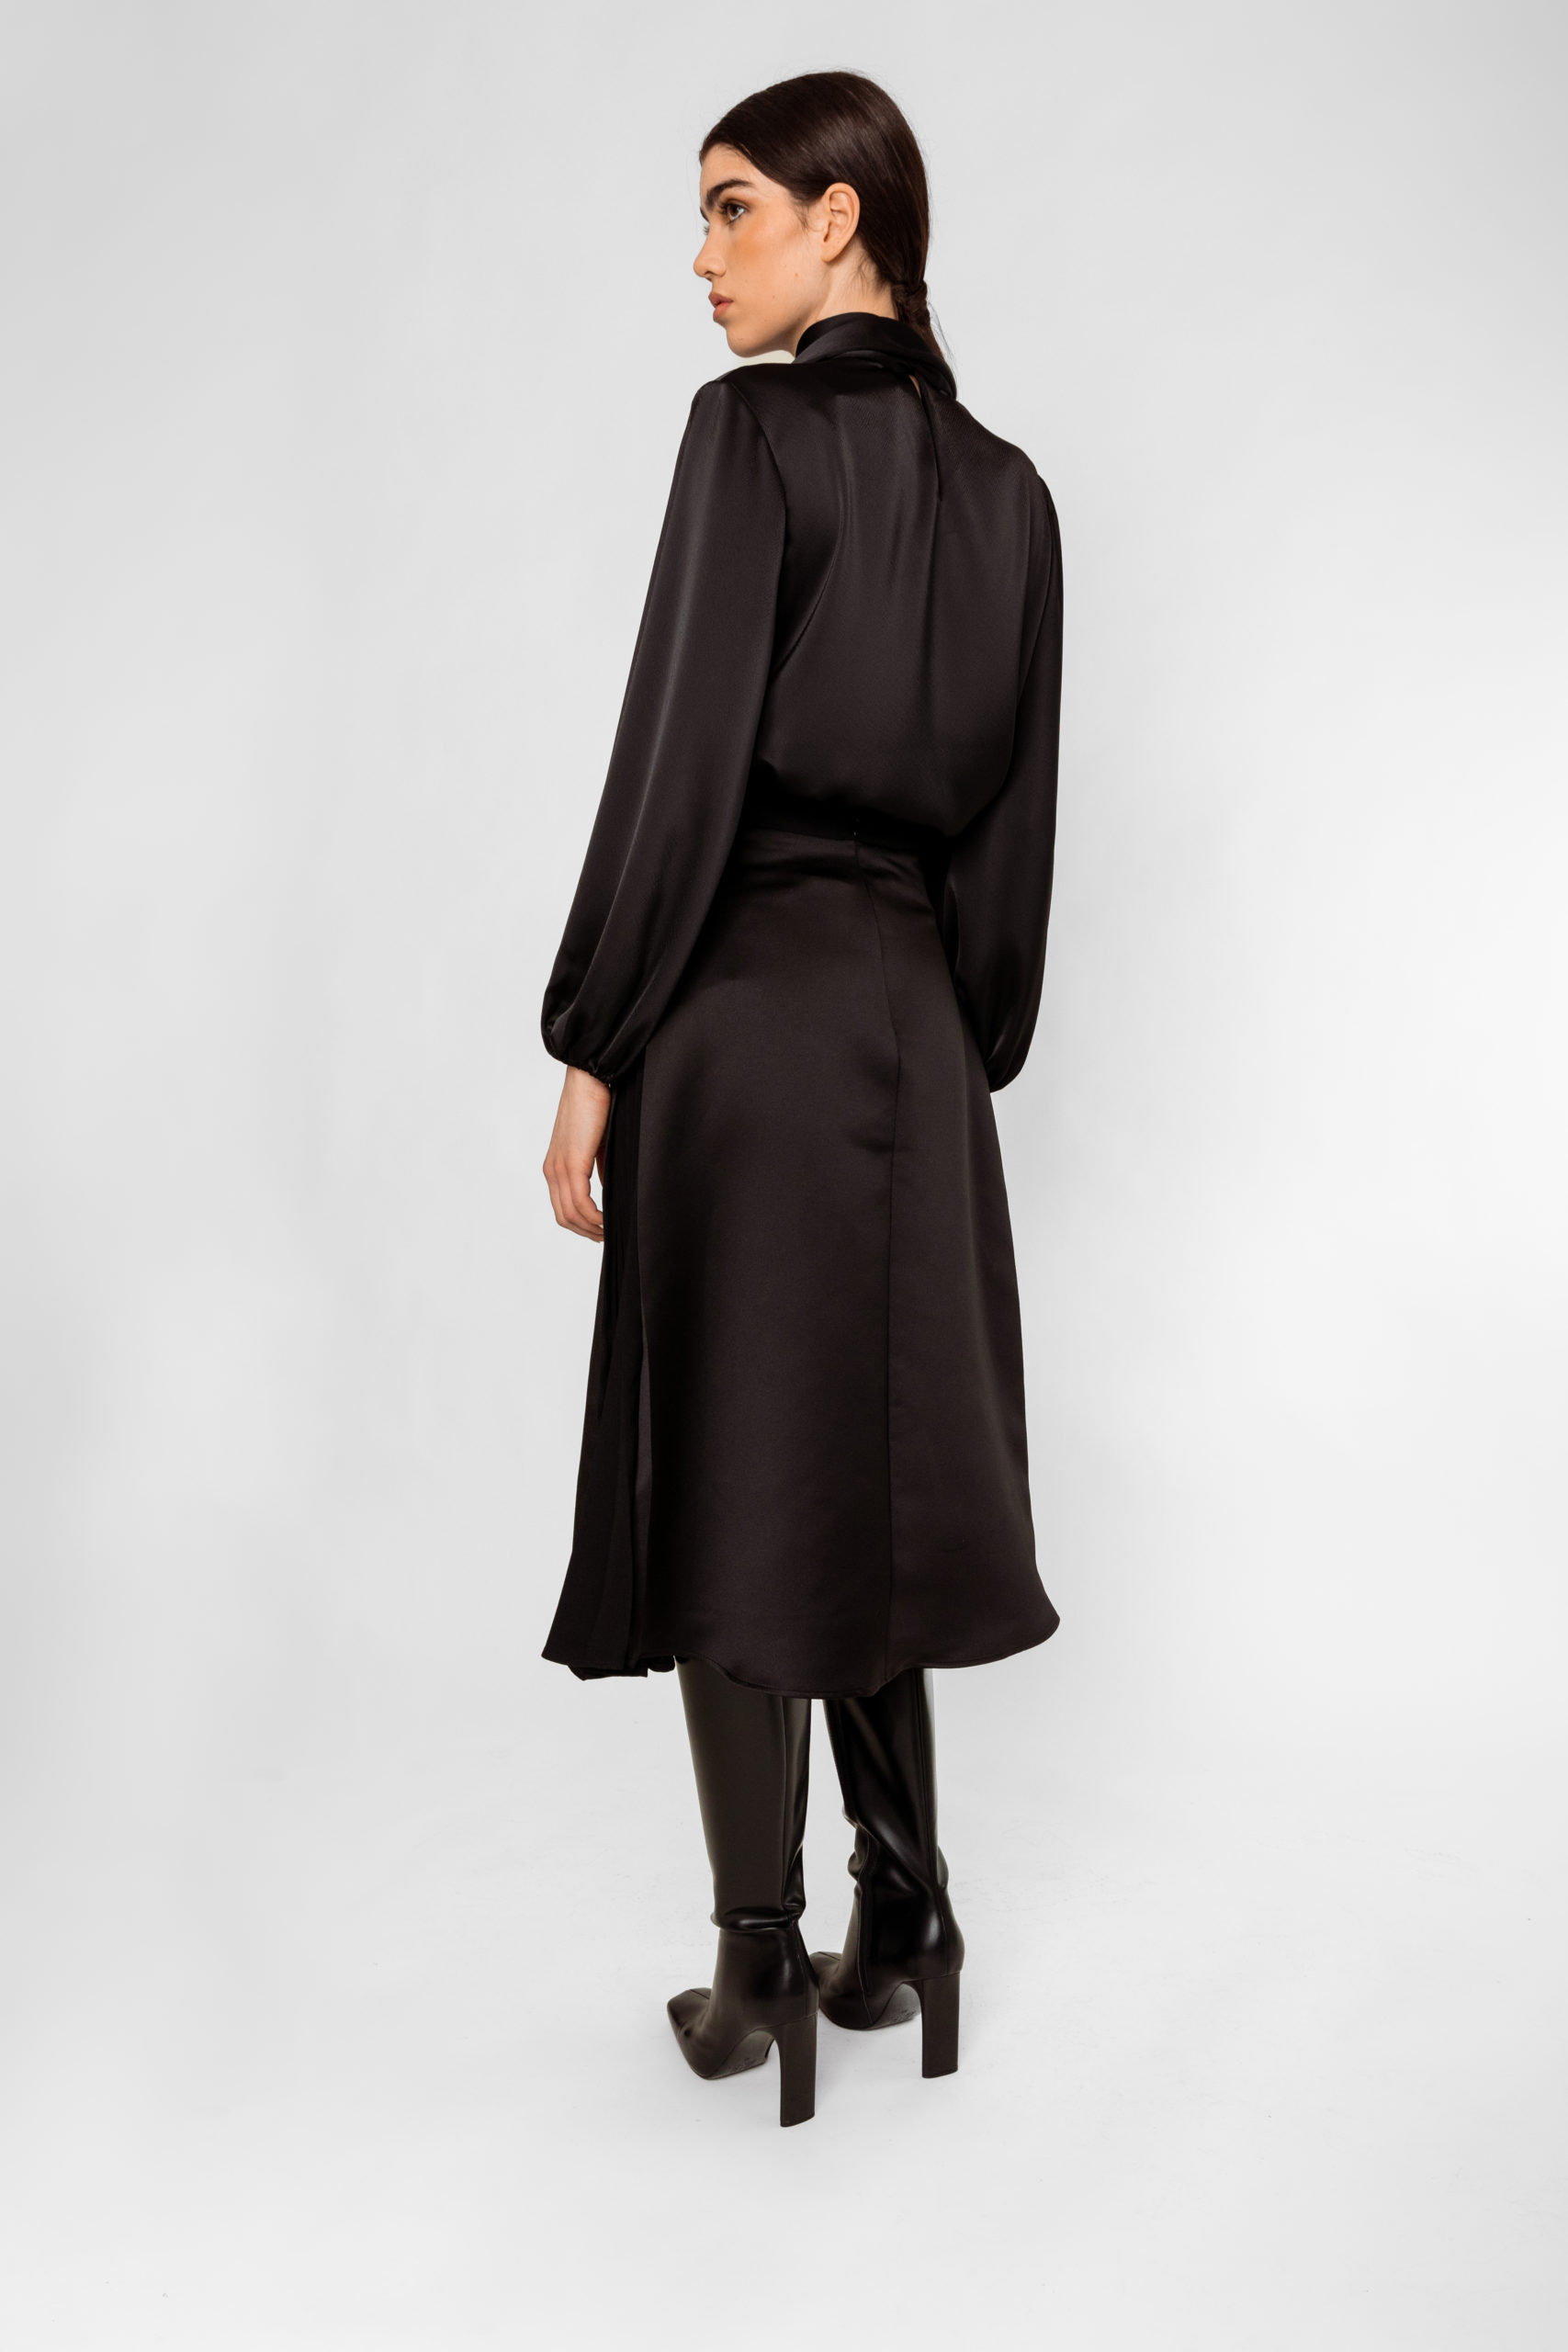 Bow Tie Satin Blouse | Designer Clothing Montreal - Claudette Floyd